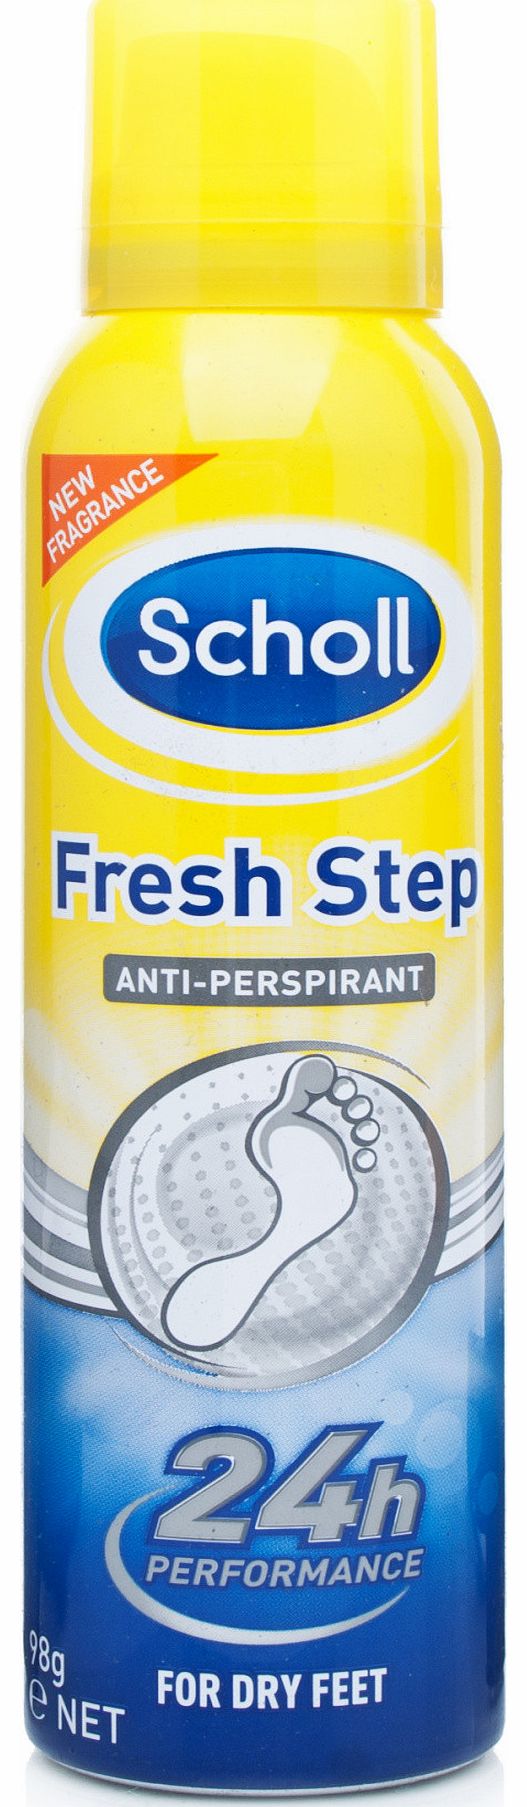 Scholl Fresh Step Foot Spray